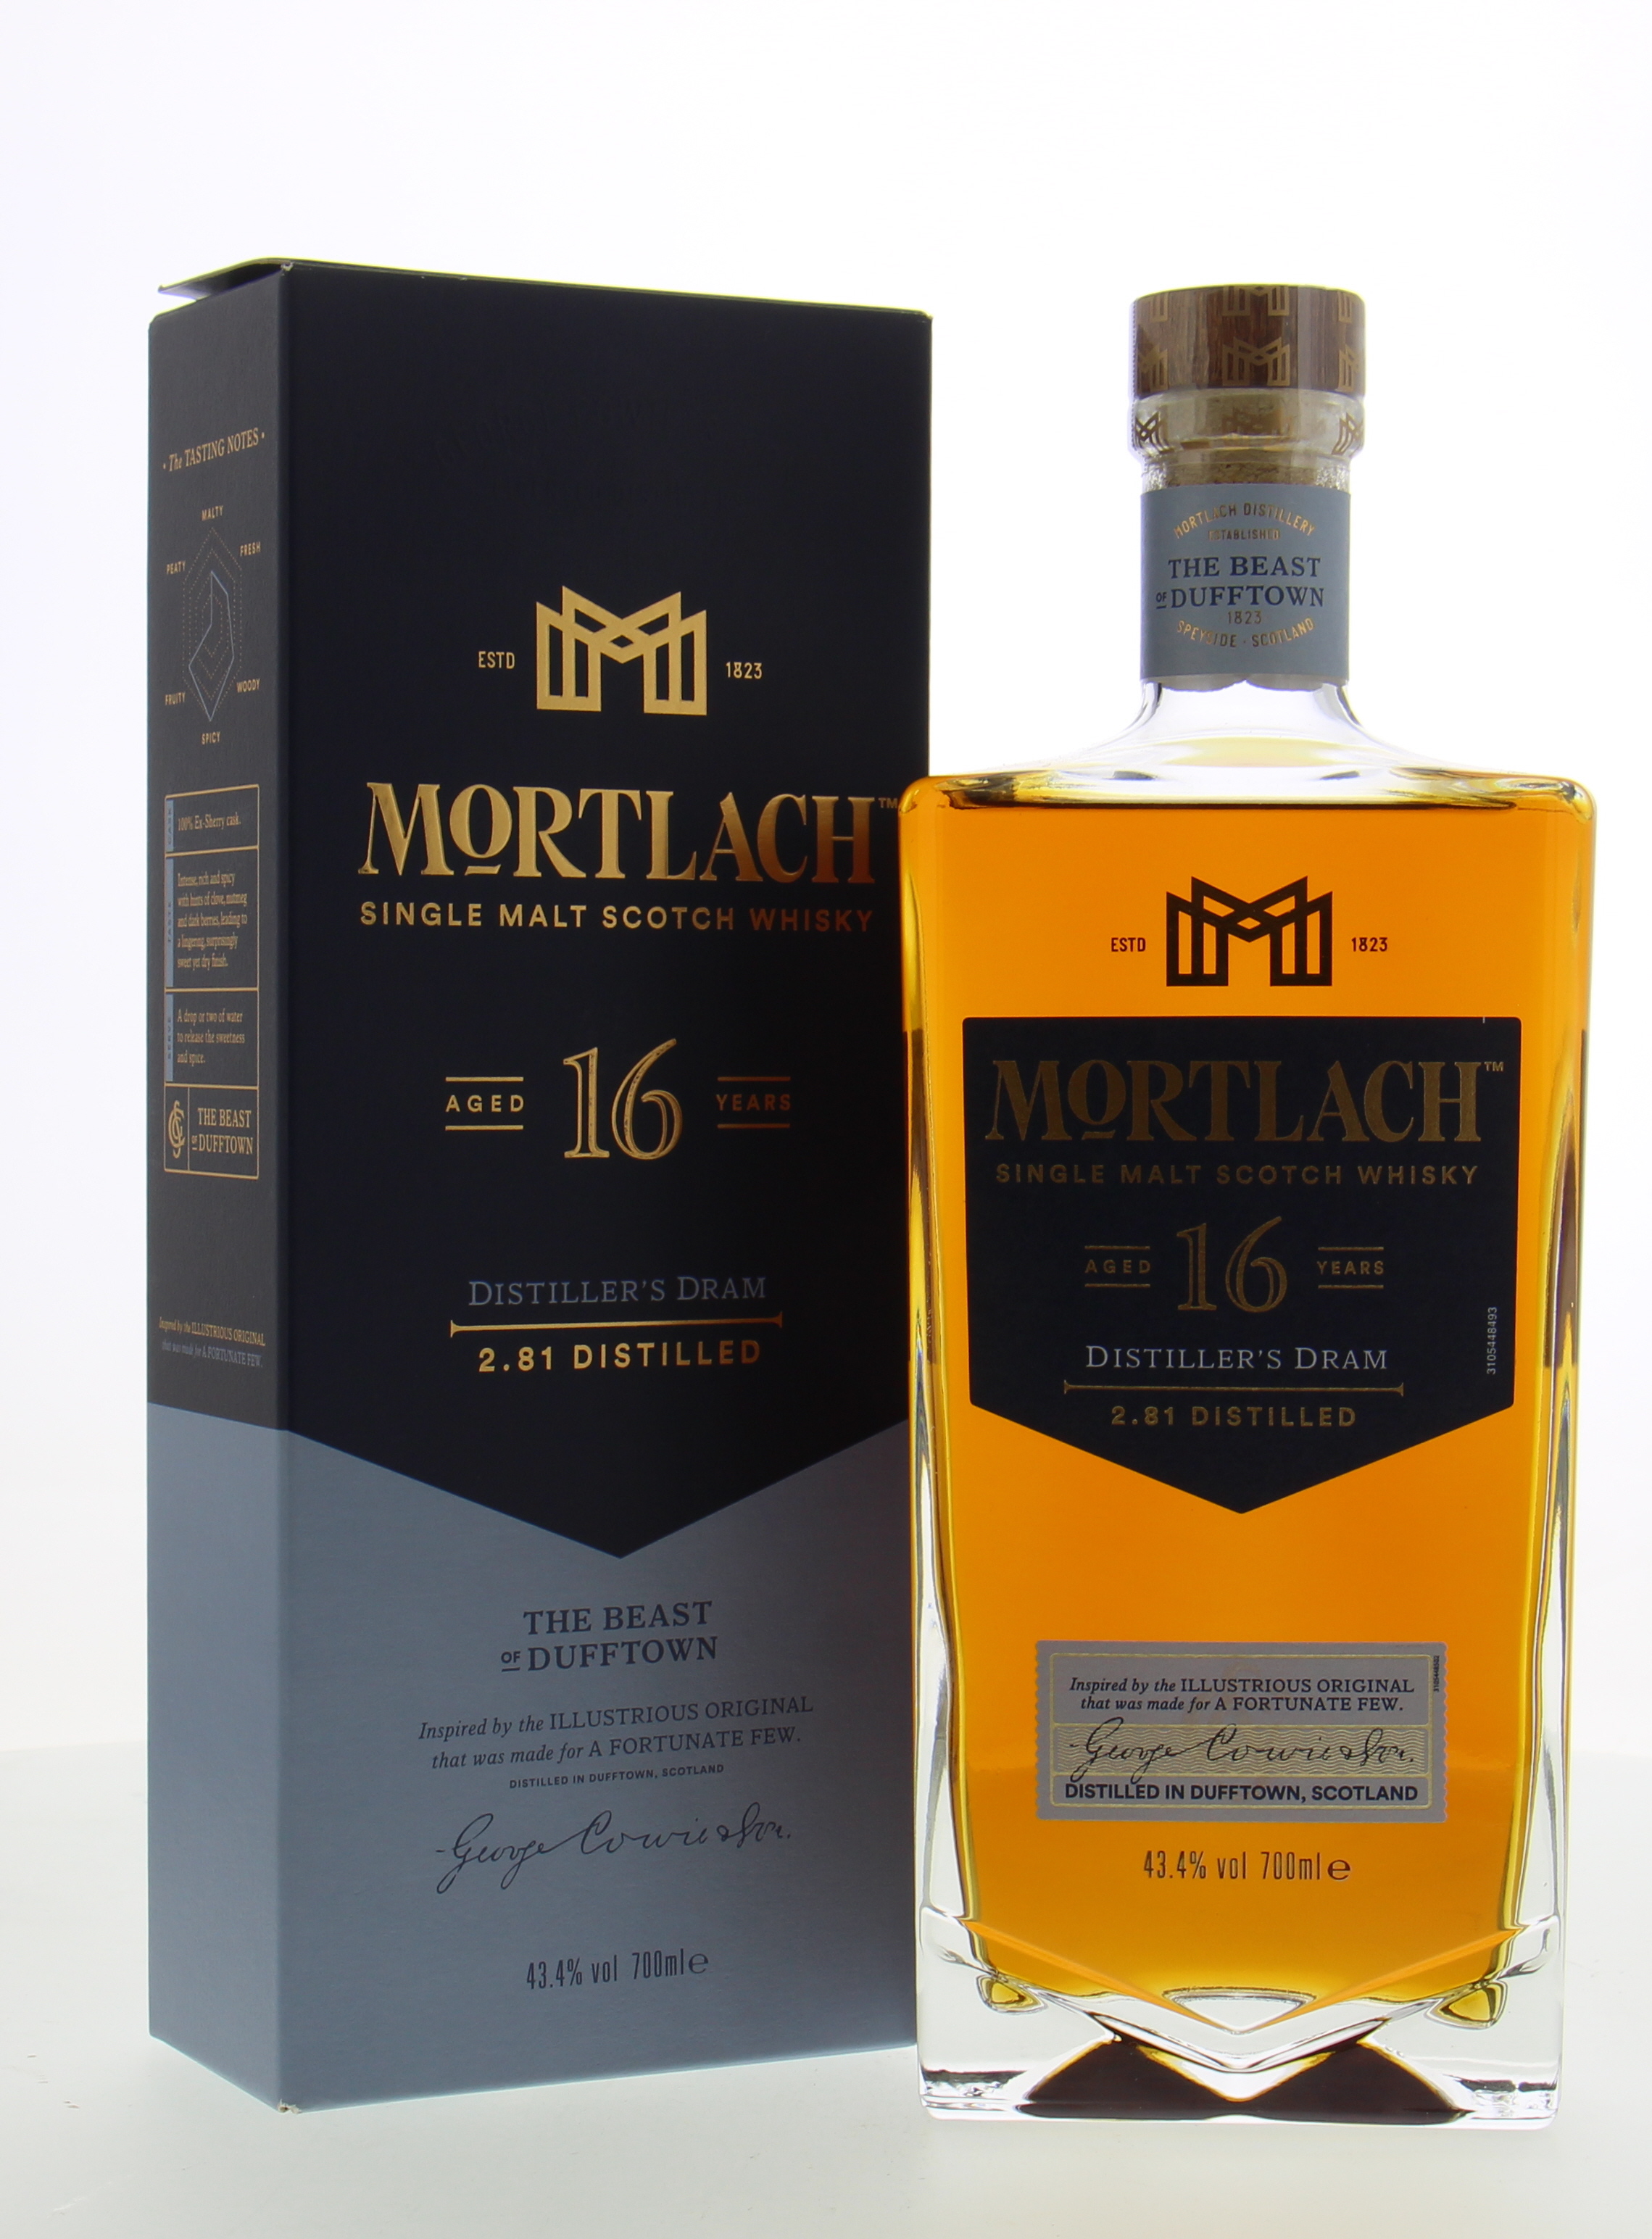 Mortlach - 16 Years Old Distiller's Dram 43.4% NV